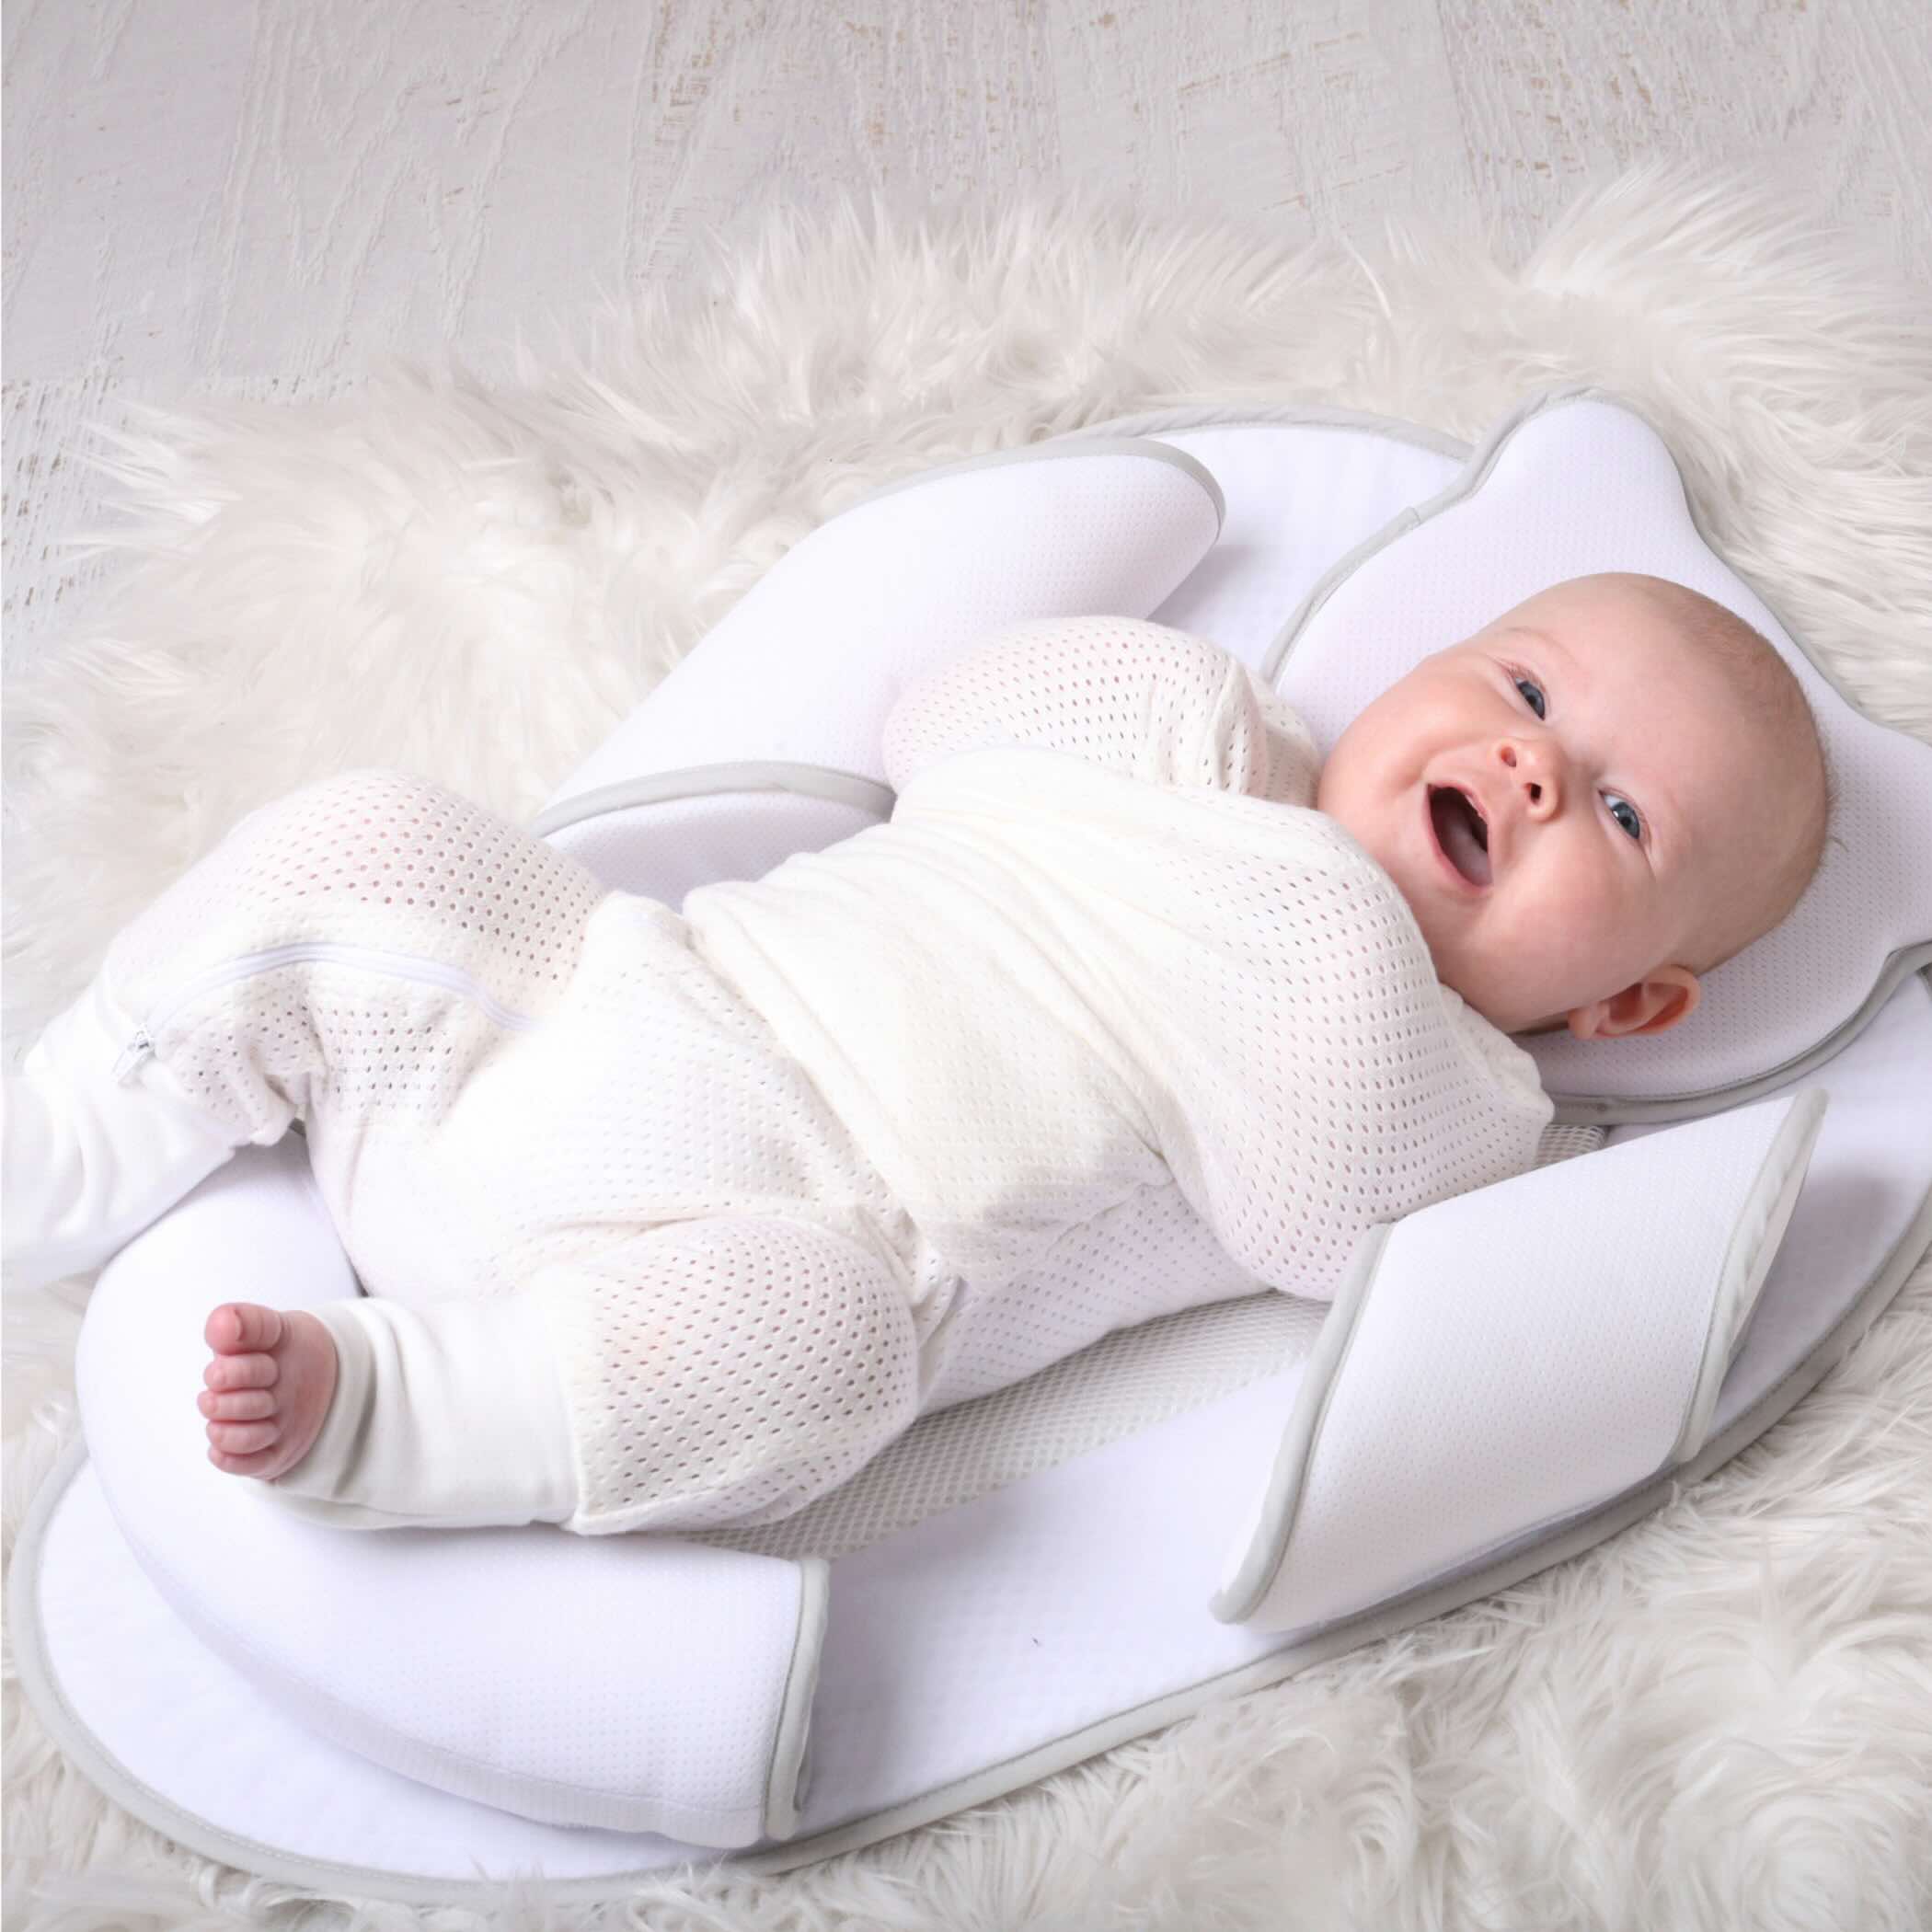 Review: Best Infant Sleep Positioner